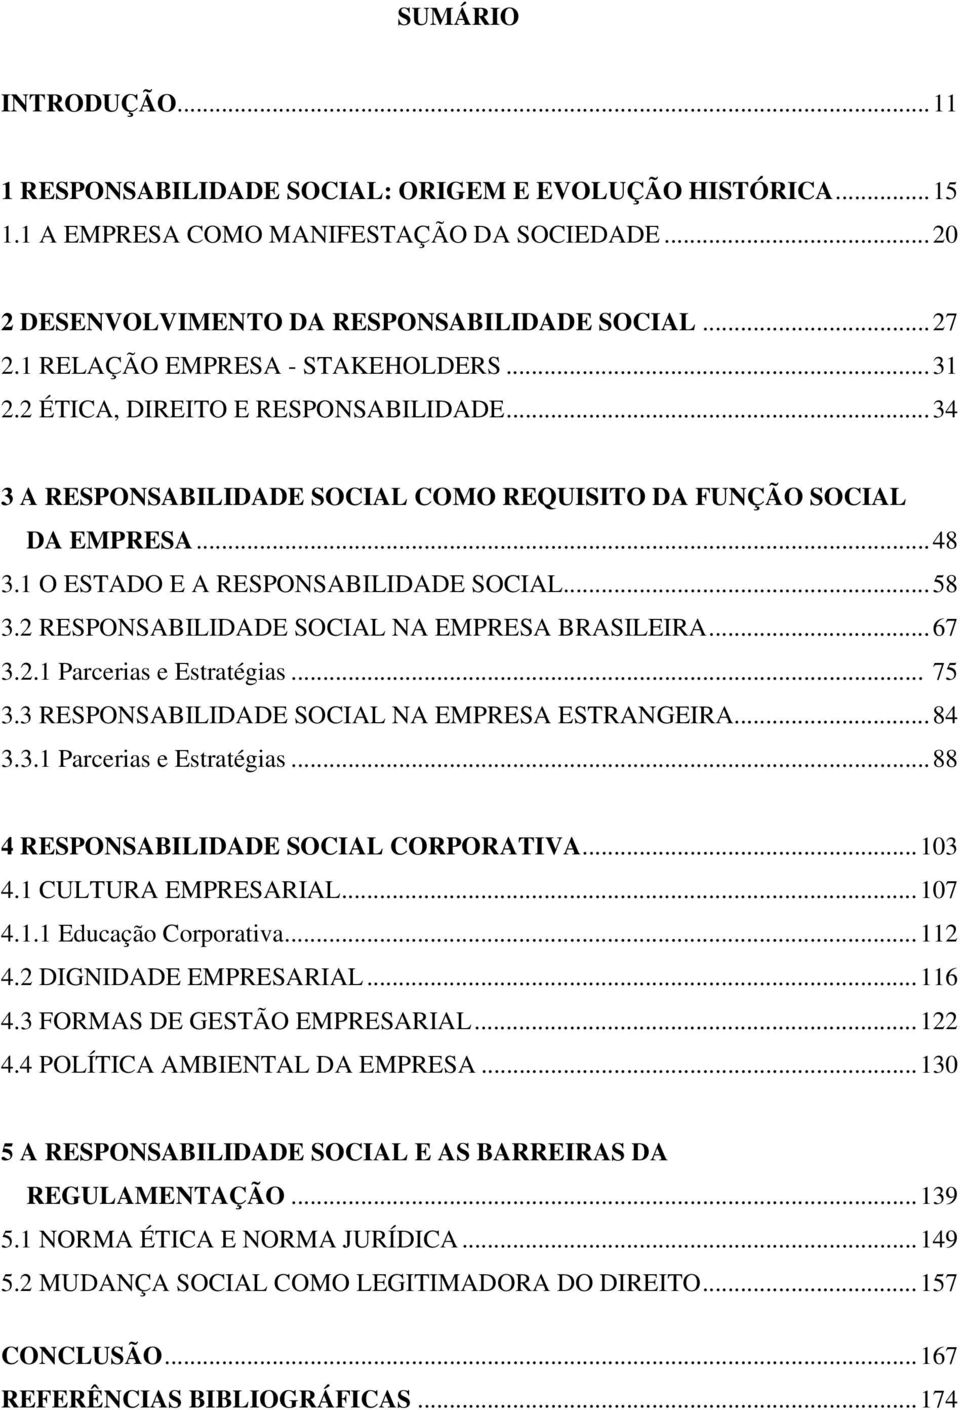 1 O ESTADO E A RESPONSABILIDADE SOCIAL... 58 3.2 RESPONSABILIDADE SOCIAL NA EMPRESA BRASILEIRA... 67 3.2.1 Parcerias e Estratégias... 75 3.3 RESPONSABILIDADE SOCIAL NA EMPRESA ESTRANGEIRA... 84 3.3.1 Parcerias e Estratégias... 88 4 RESPONSABILIDADE SOCIAL CORPORATIVA.